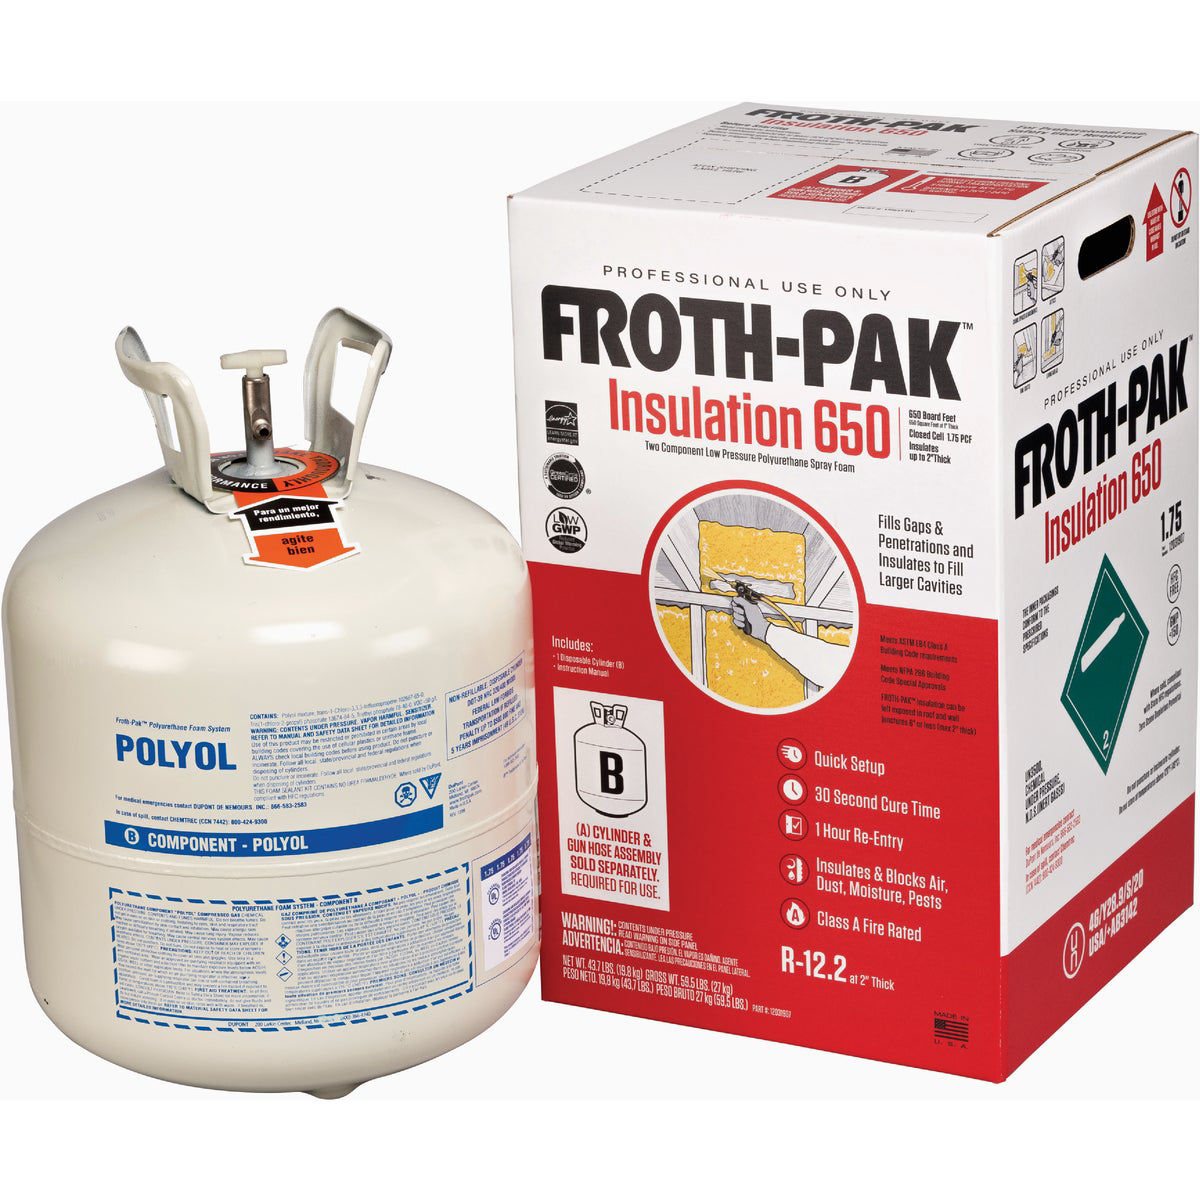 FROTH-PAK 650 B-Polyol Foam Insulation